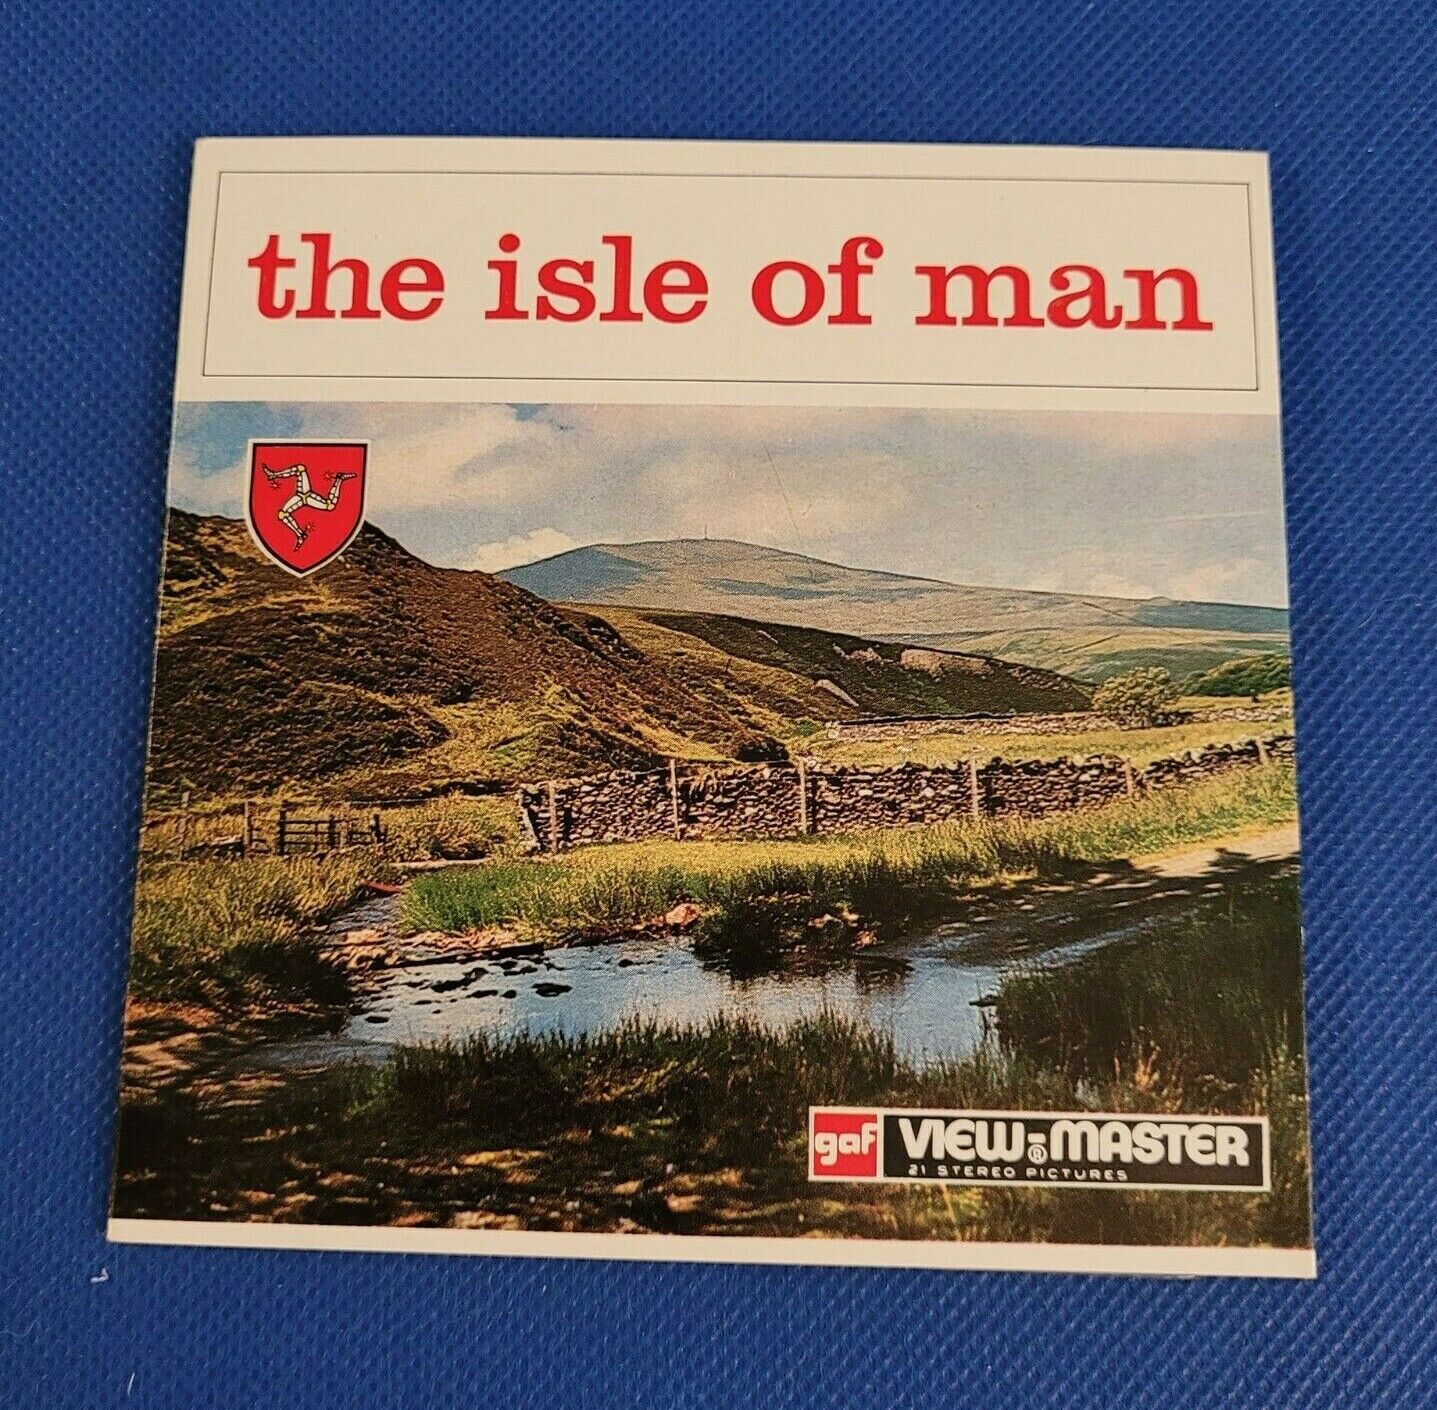 Vintage Gaf C278 The Isle of Man England view-master 3 Reels Folder Packet Reel